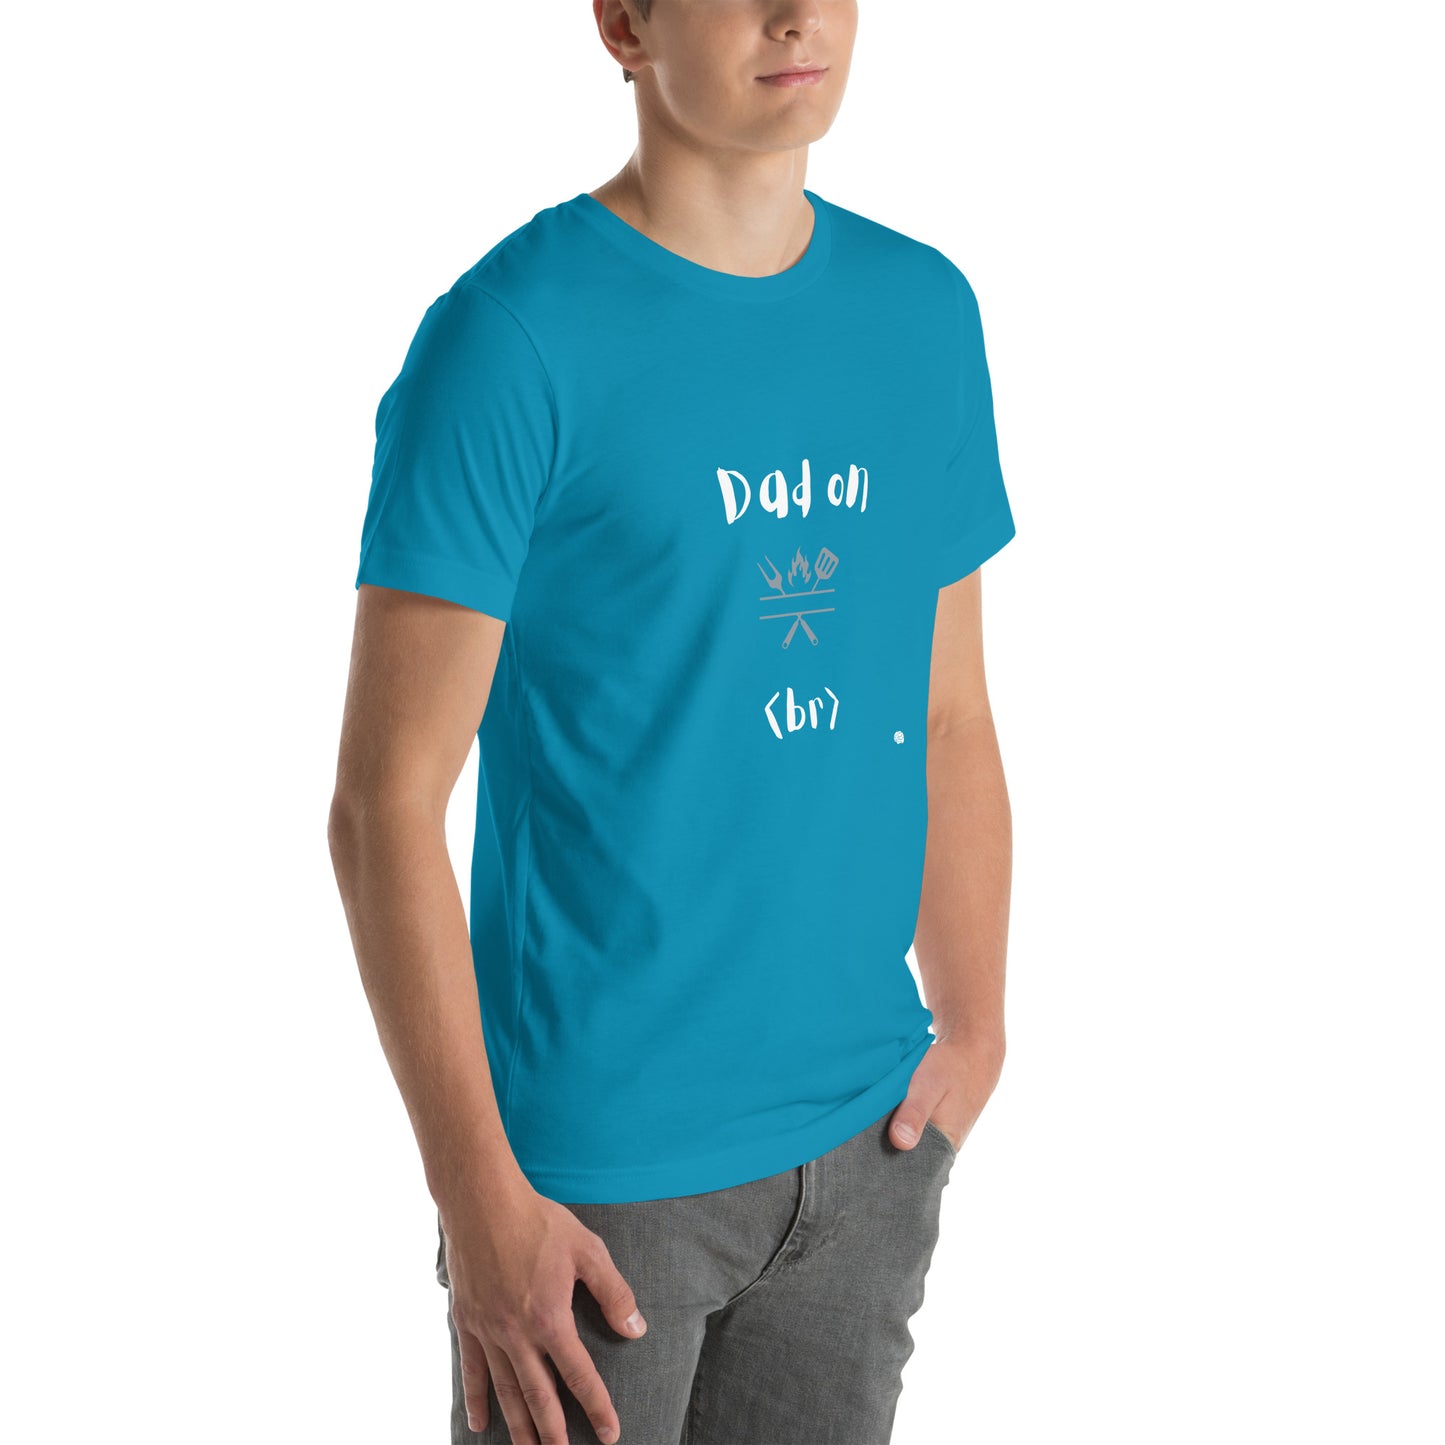 Coding - Dad on <br> (Men's T-shirt)